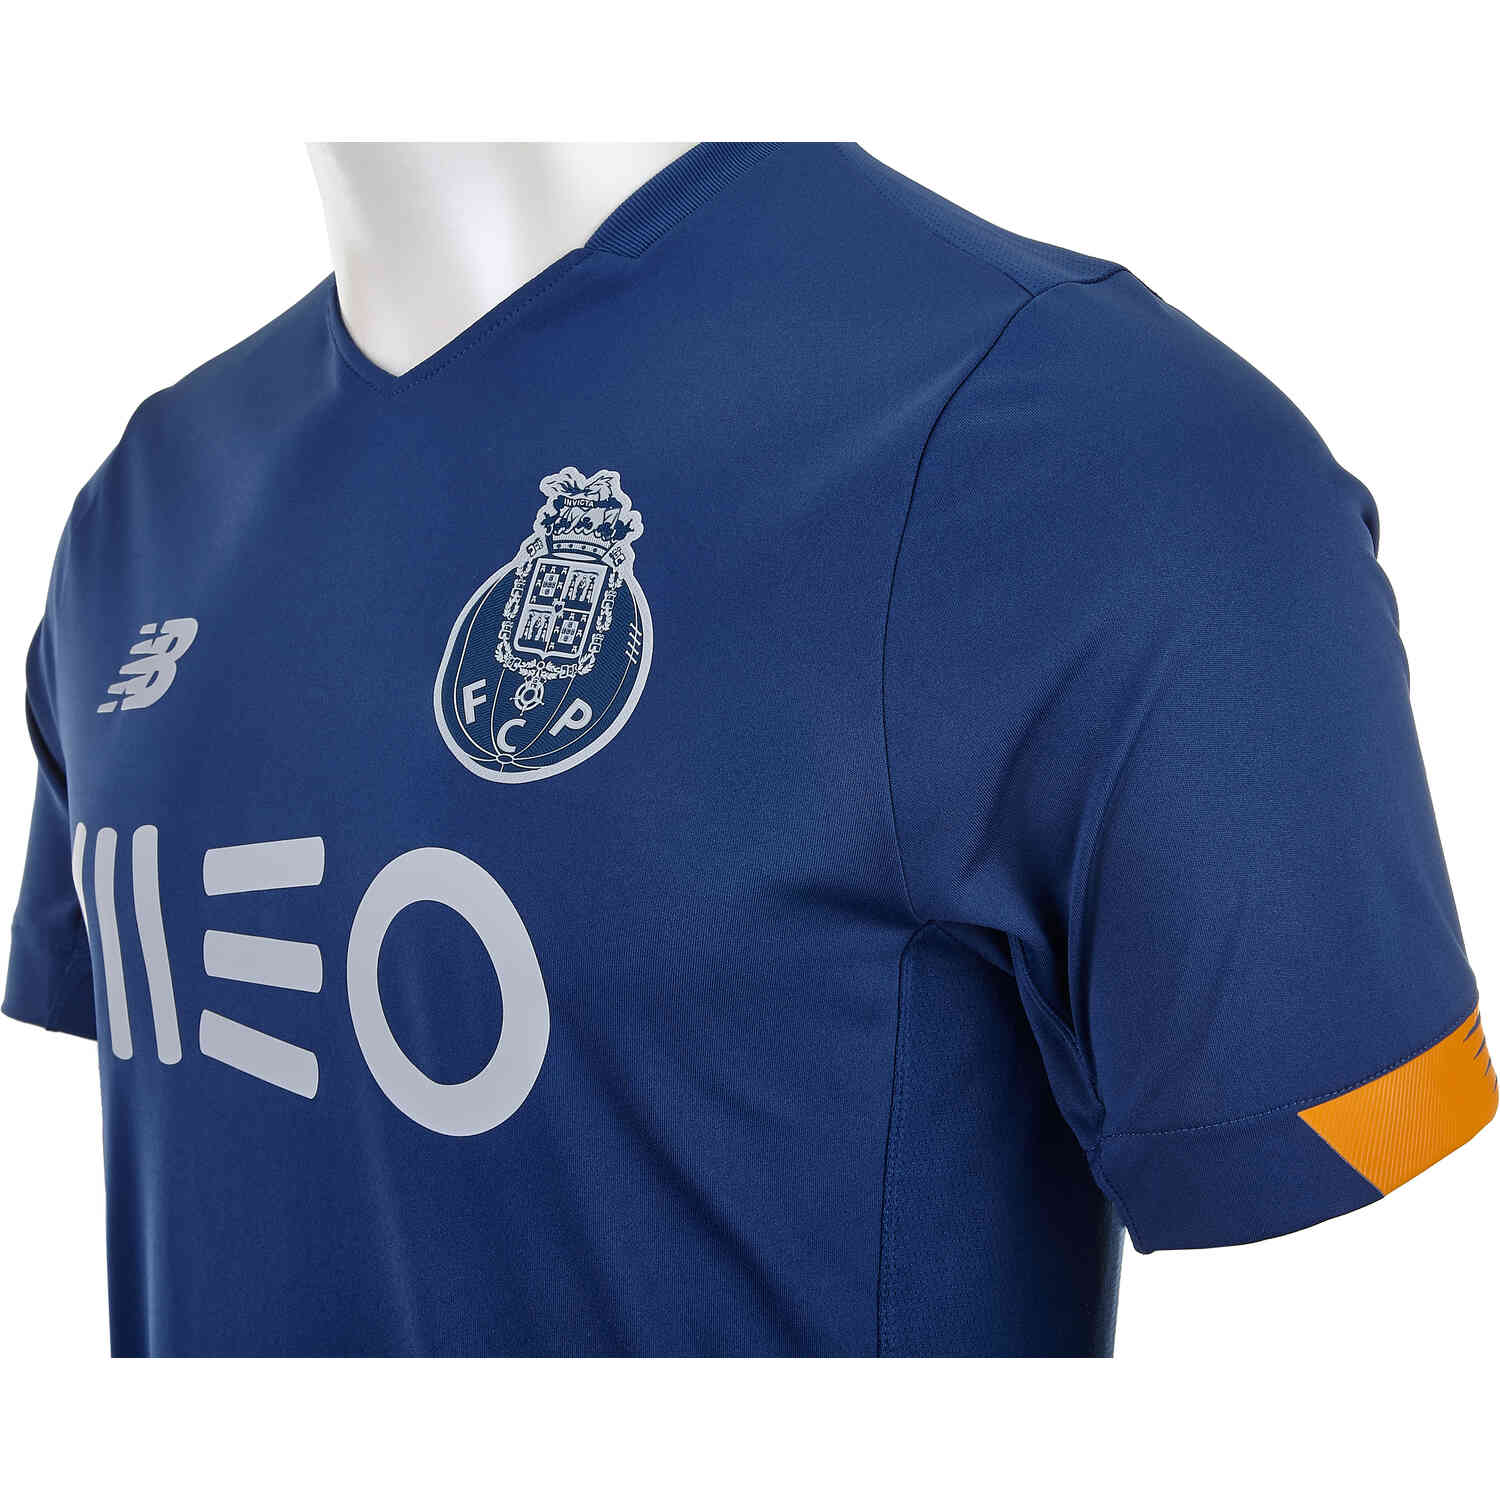 New Balance Porto Away Jersey - 2020/21 - SoccerPro